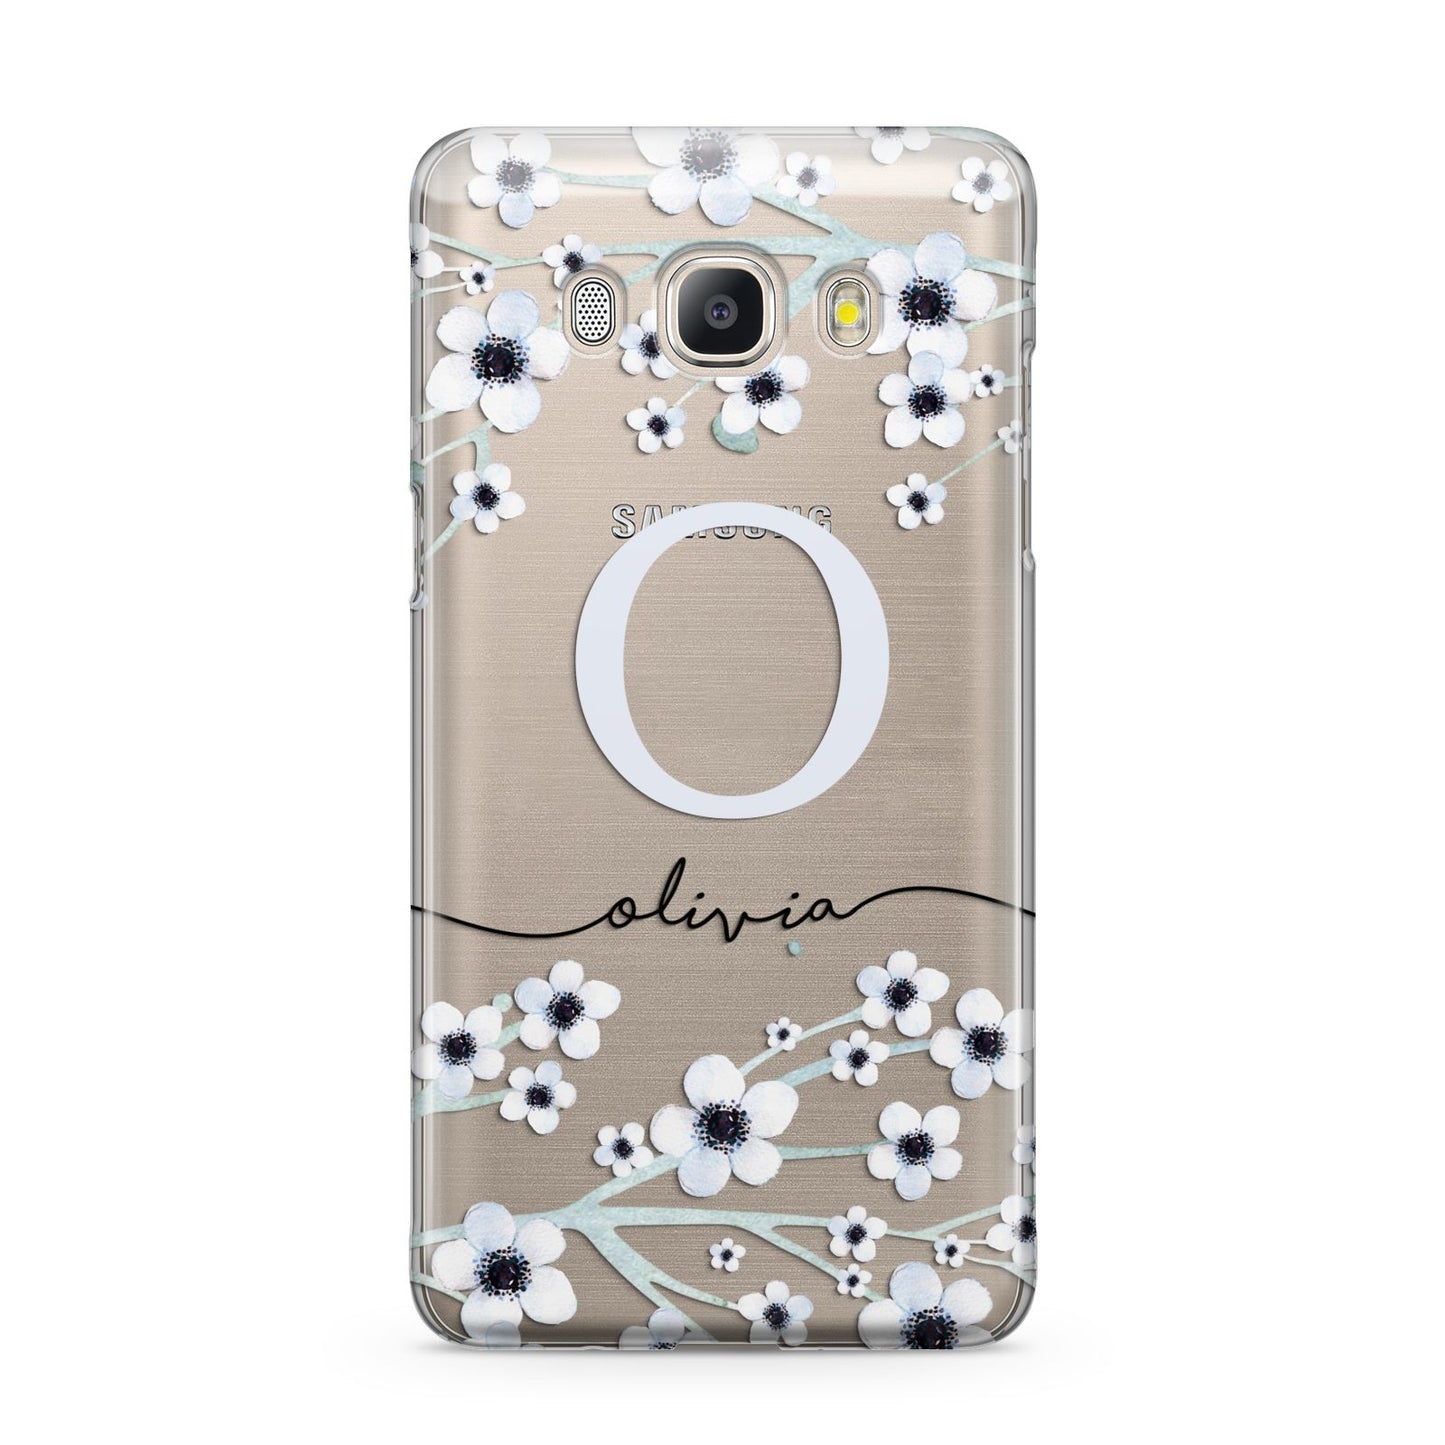 Personalised White Flower Samsung Galaxy J5 2016 Case